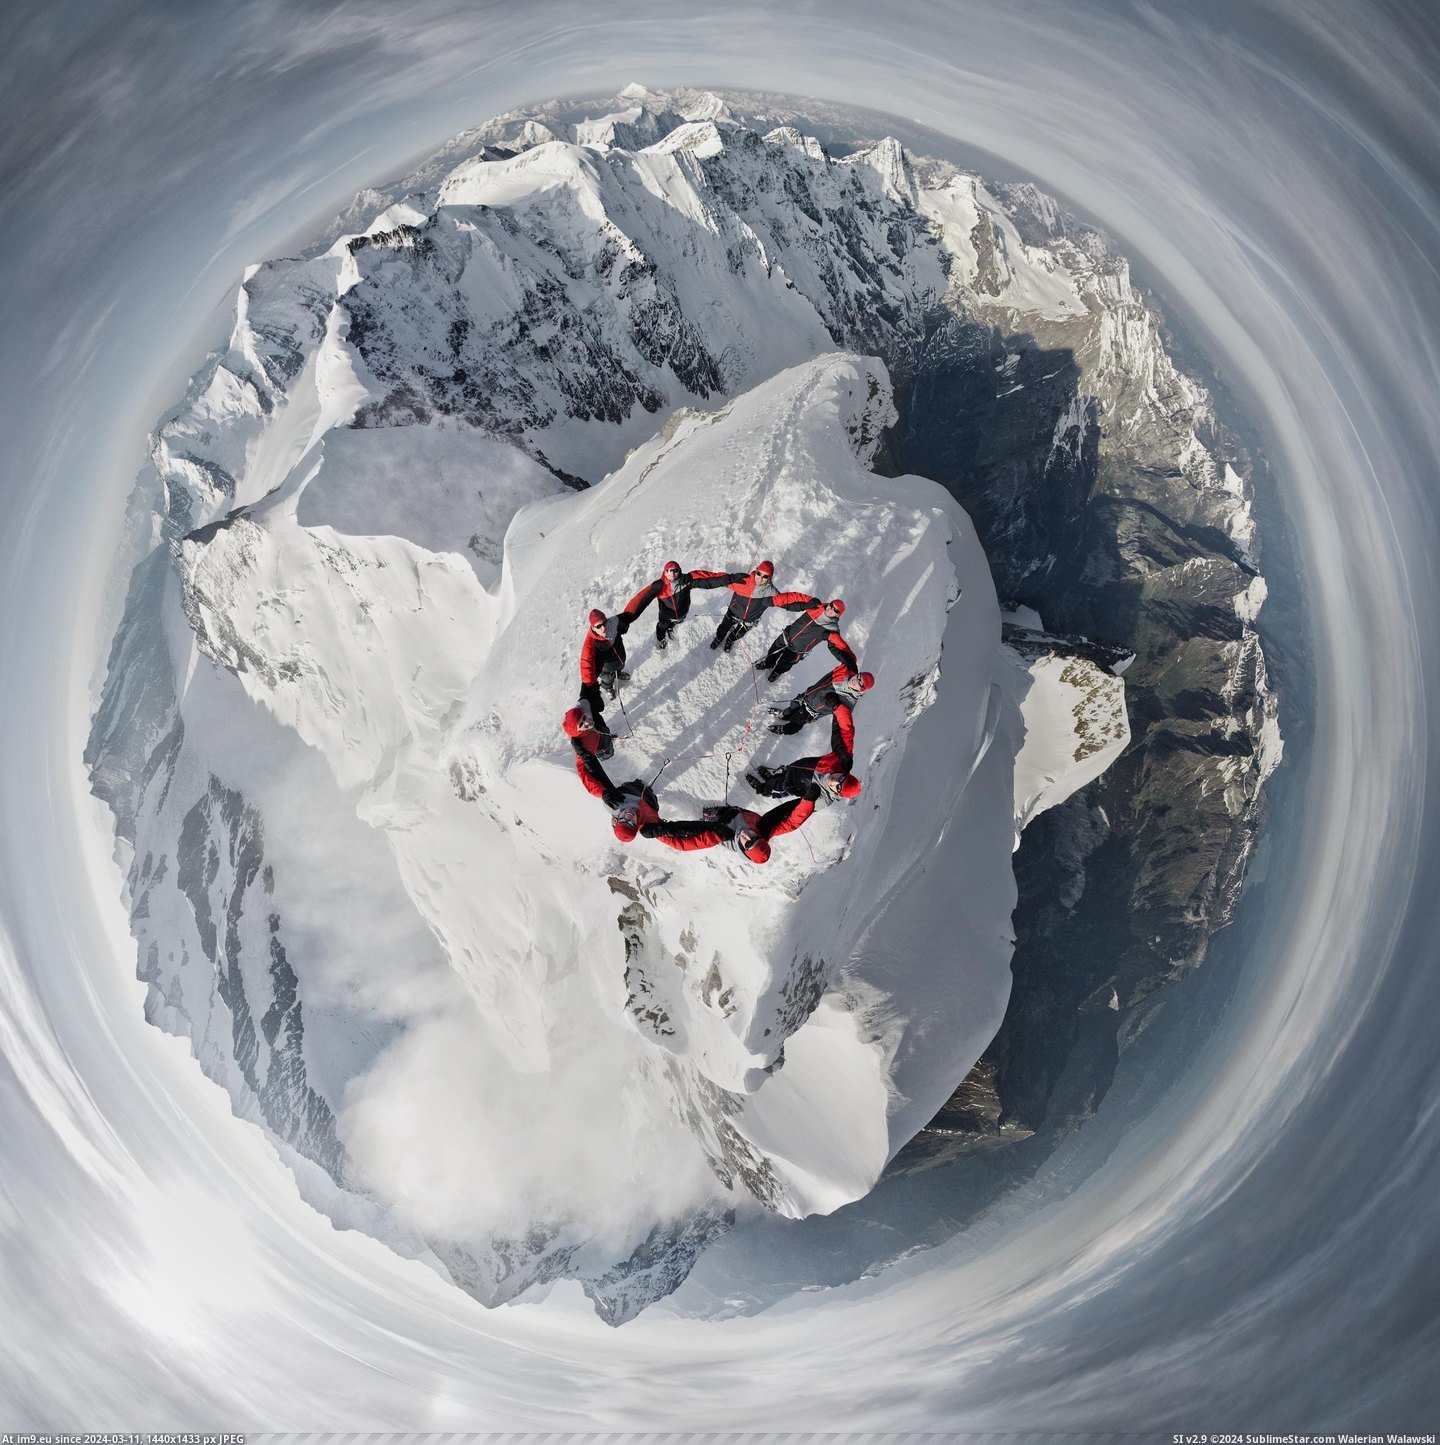 #Picture #Drone #Matterhorn [Pics] Matterhorn Drone Picture Pic. (Image of album My r/PICS favs))